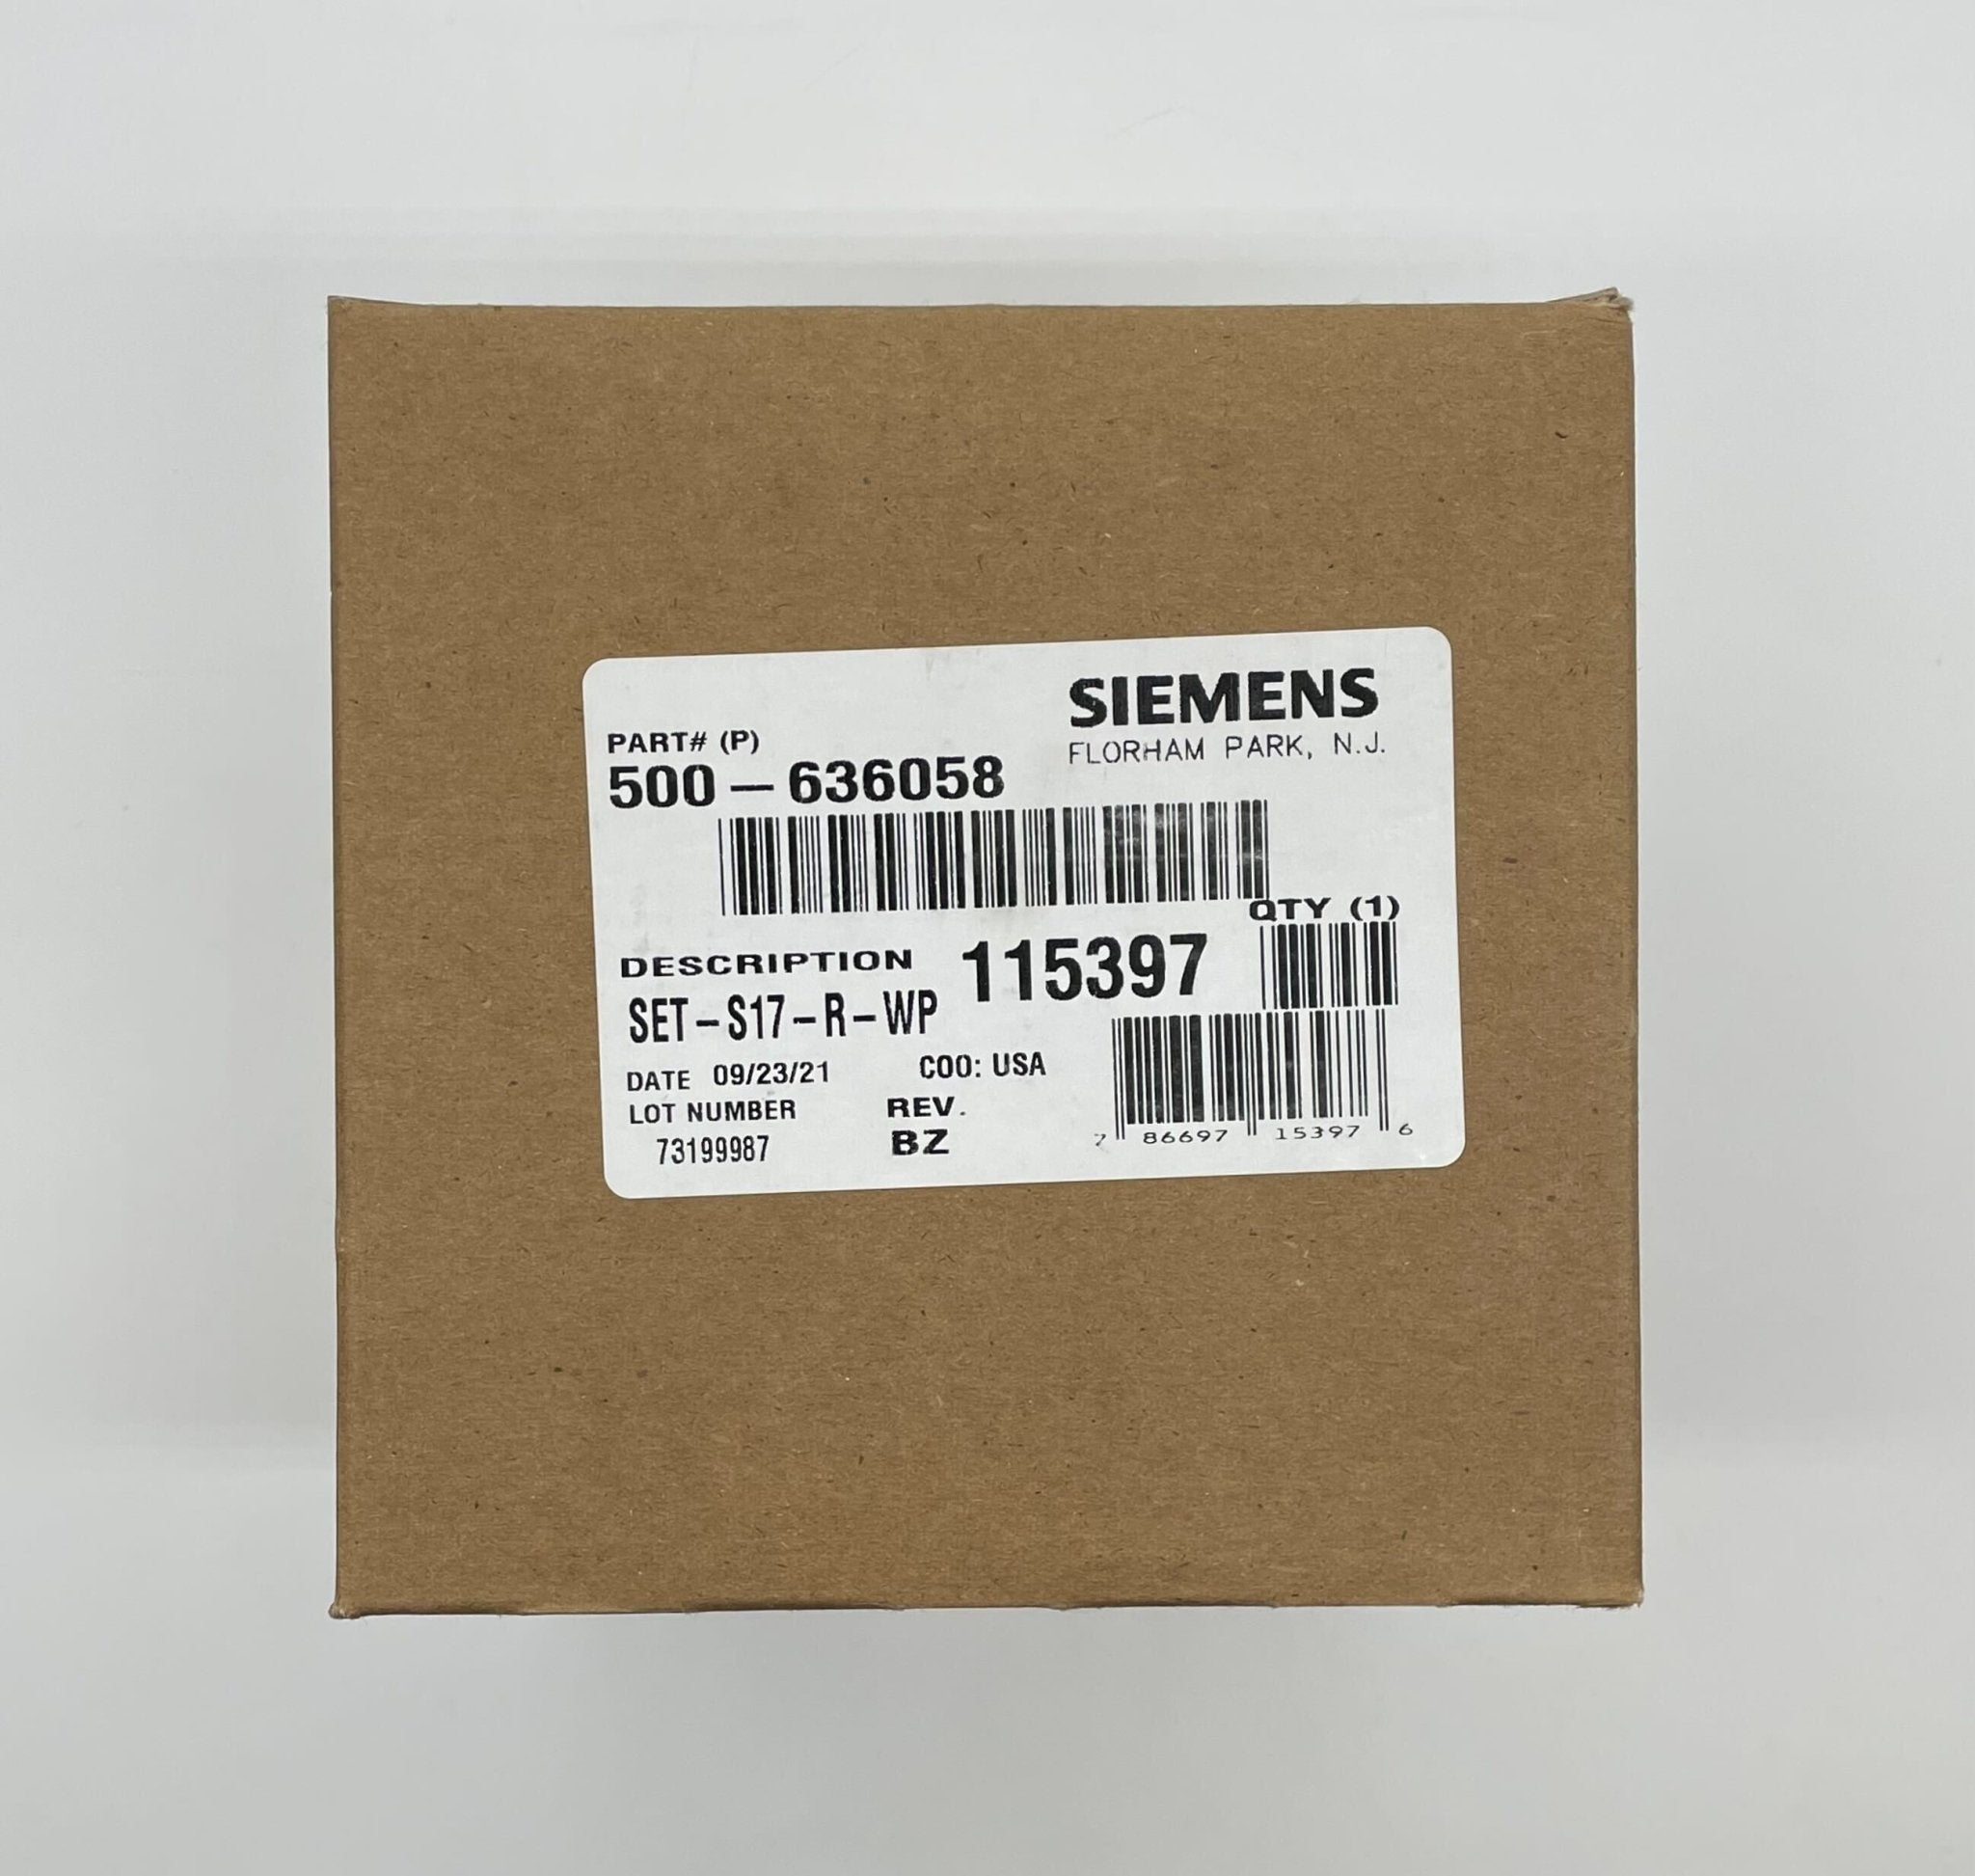 Siemens SET-S17-R-WP Et Spkr 15/75 Strobe Red - The Fire Alarm Supplier